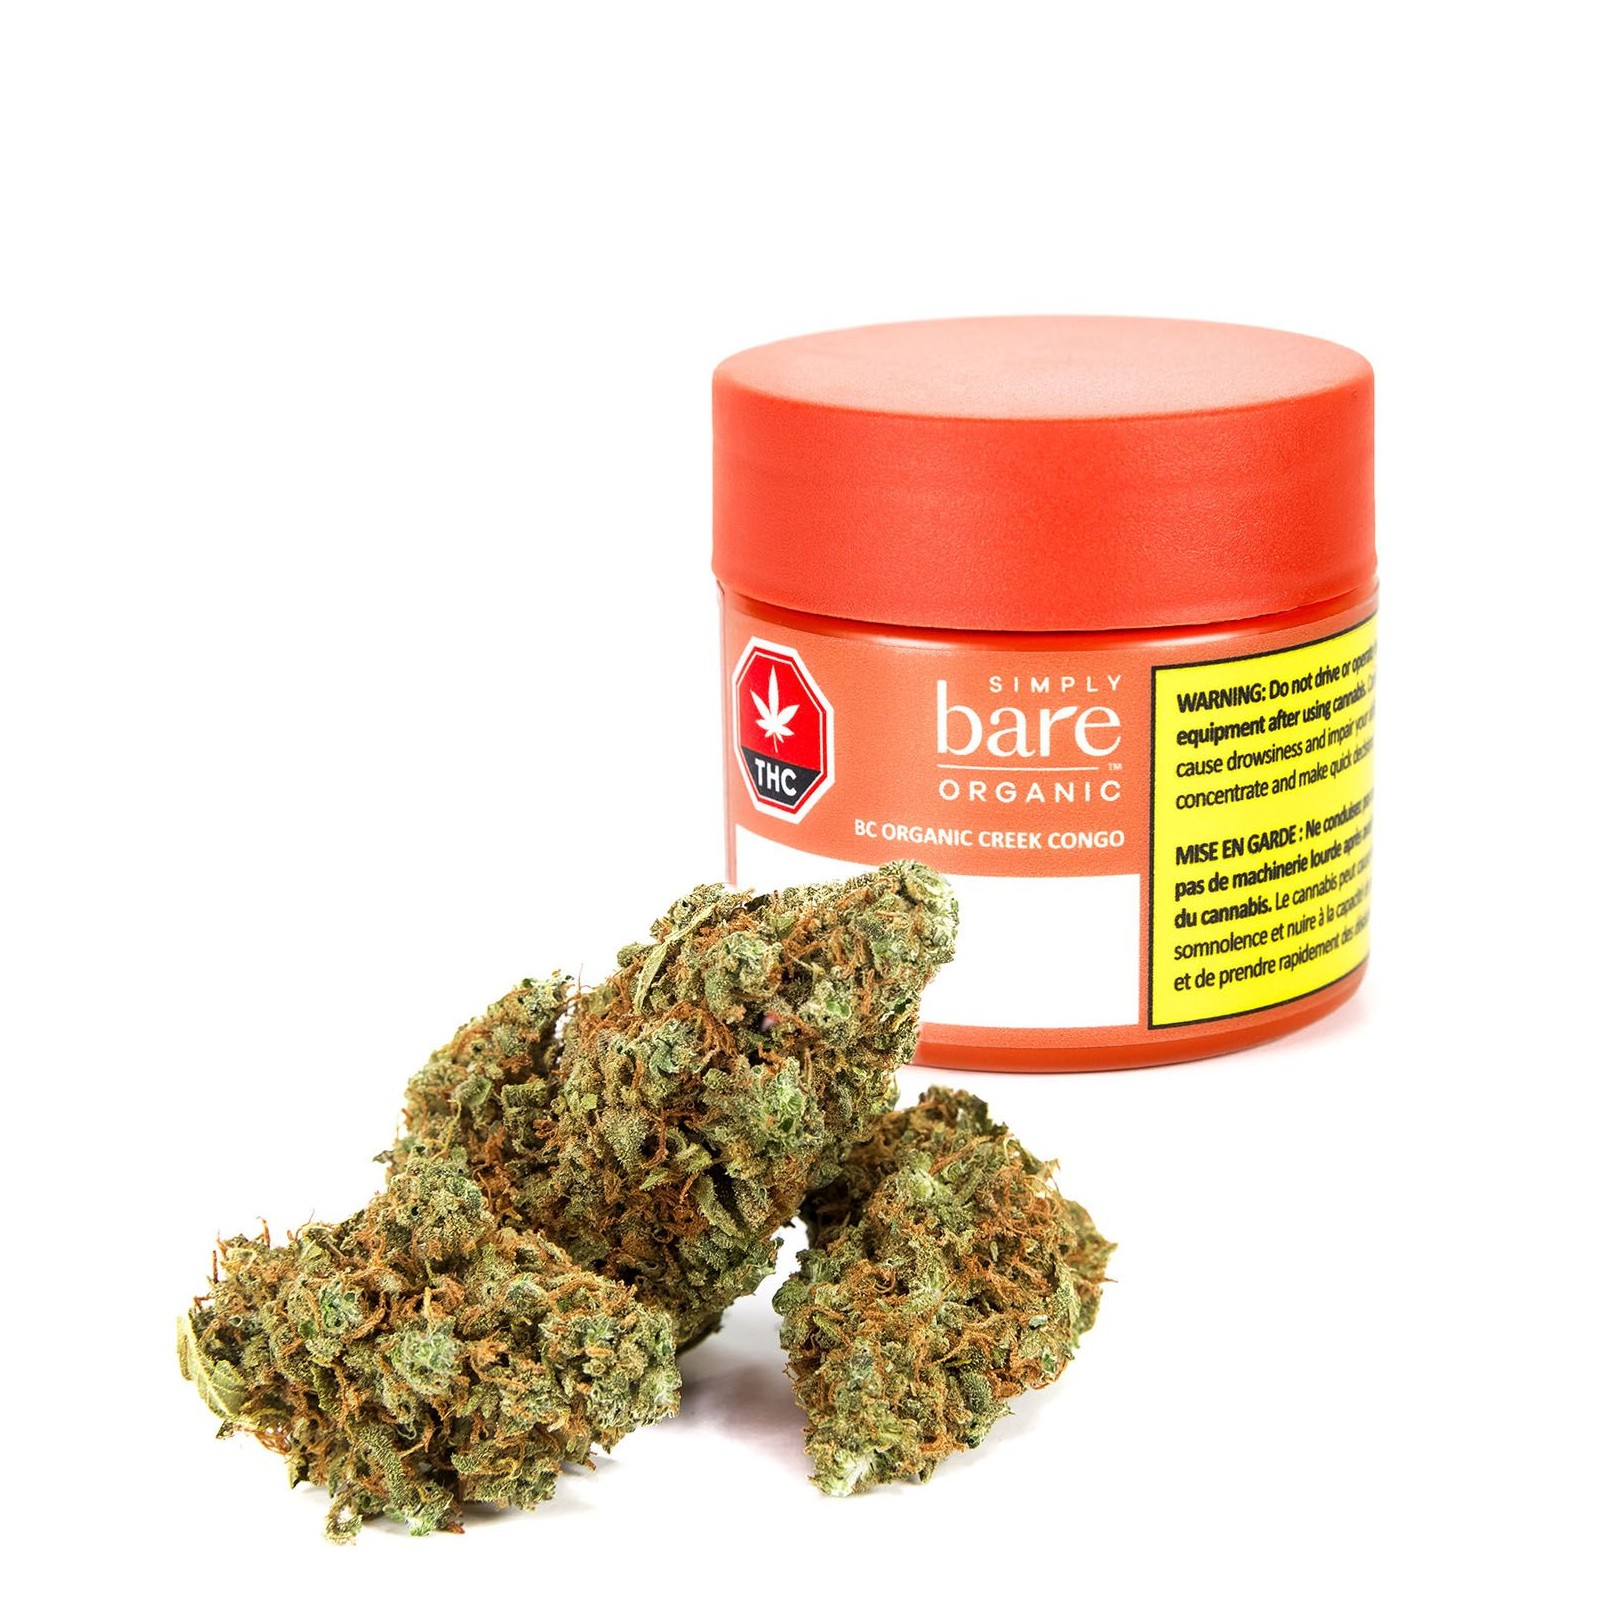 Simply Bare: Nature's True Cannabis.